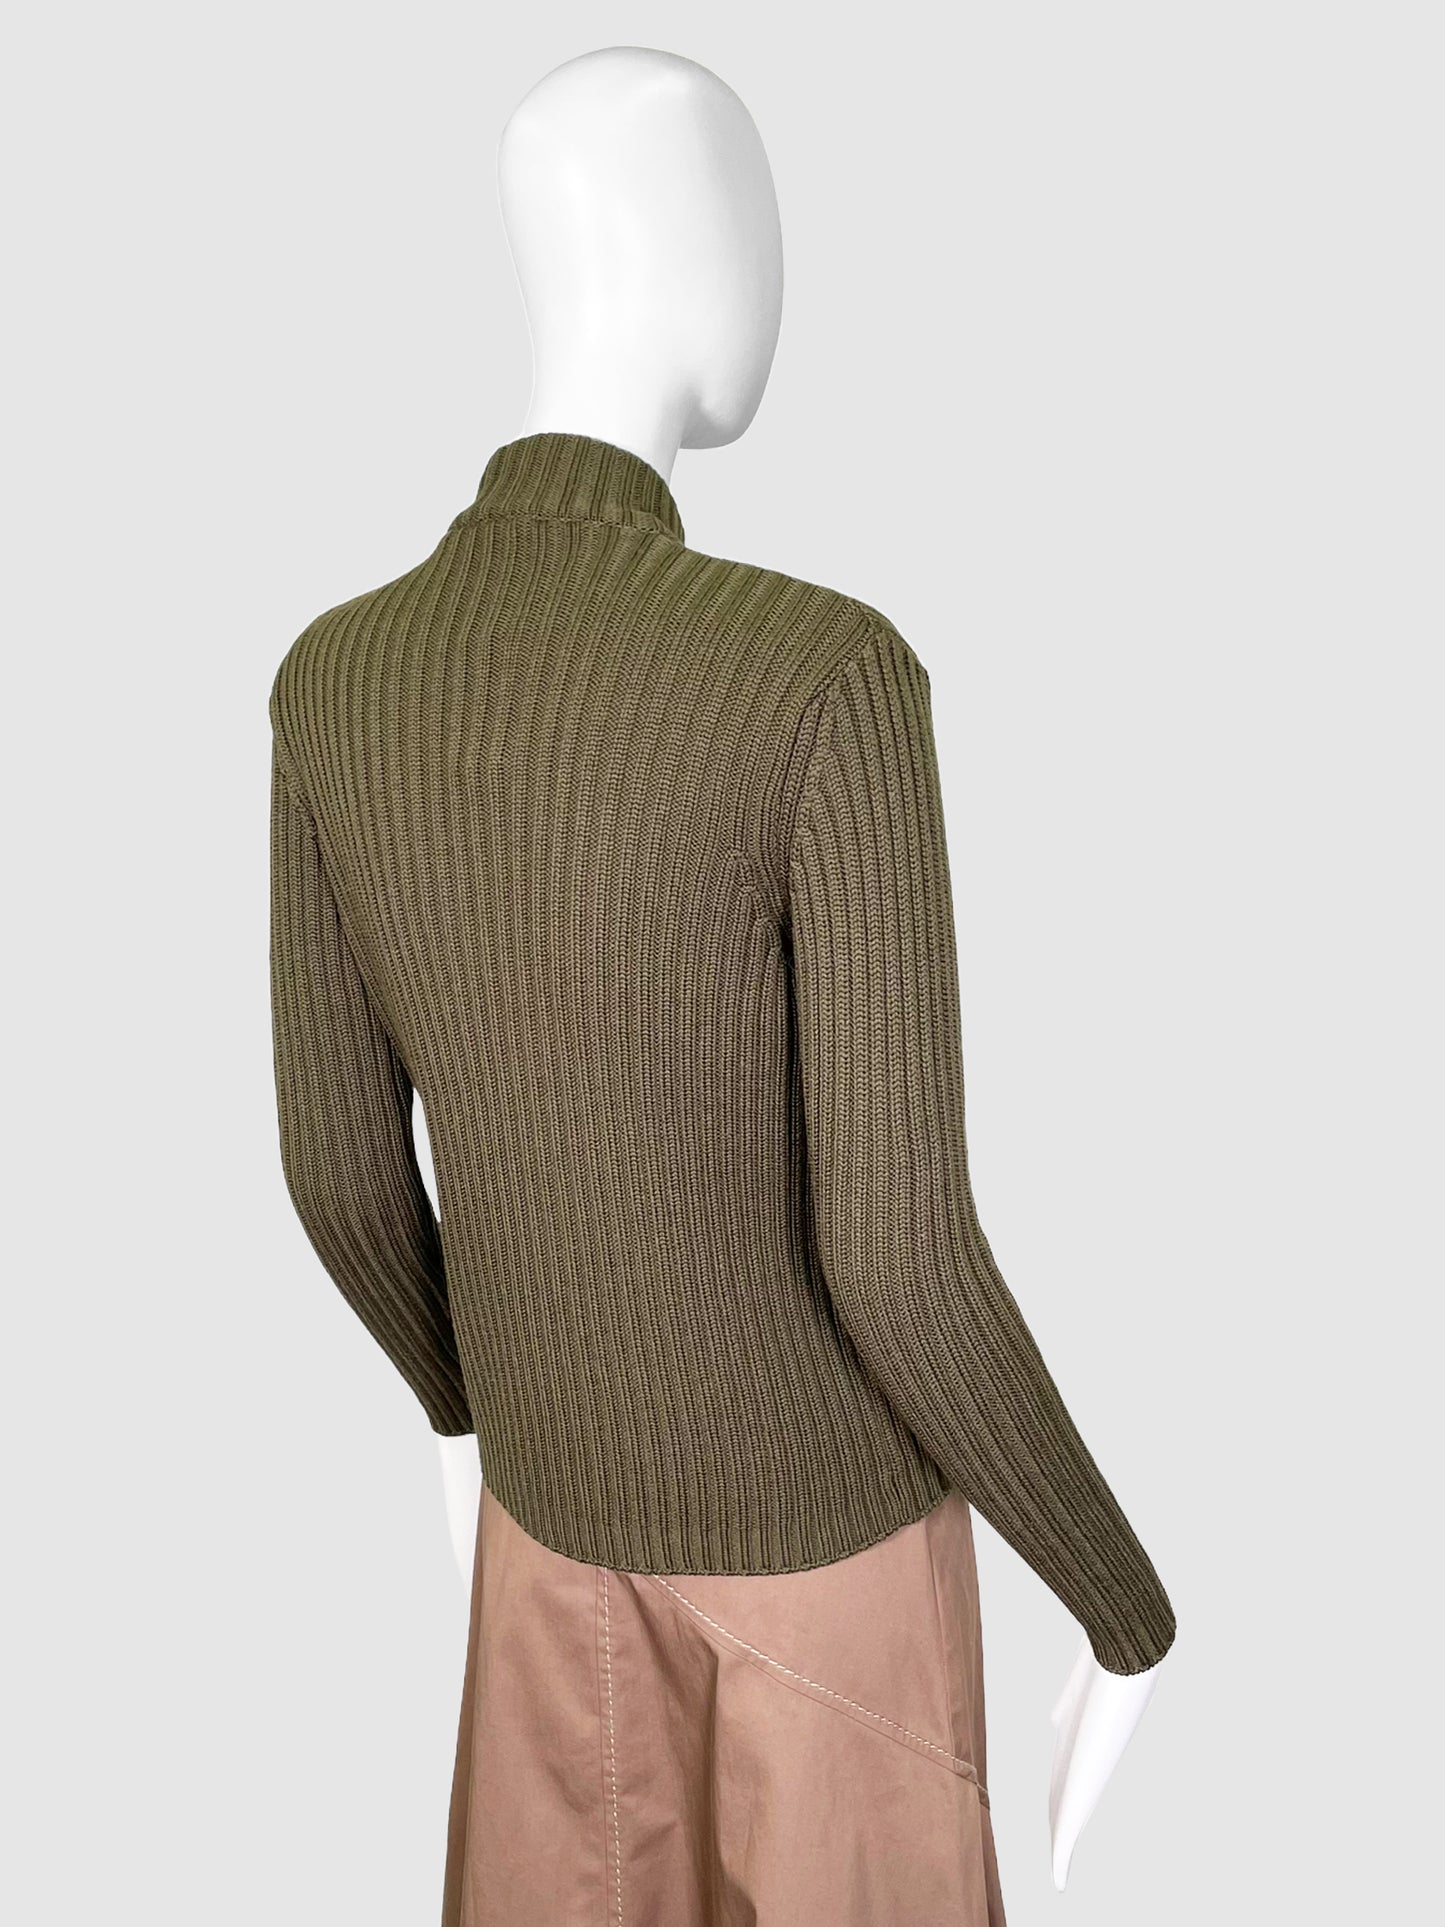 Prada Ribbed Zip Up Sweater - Size 38